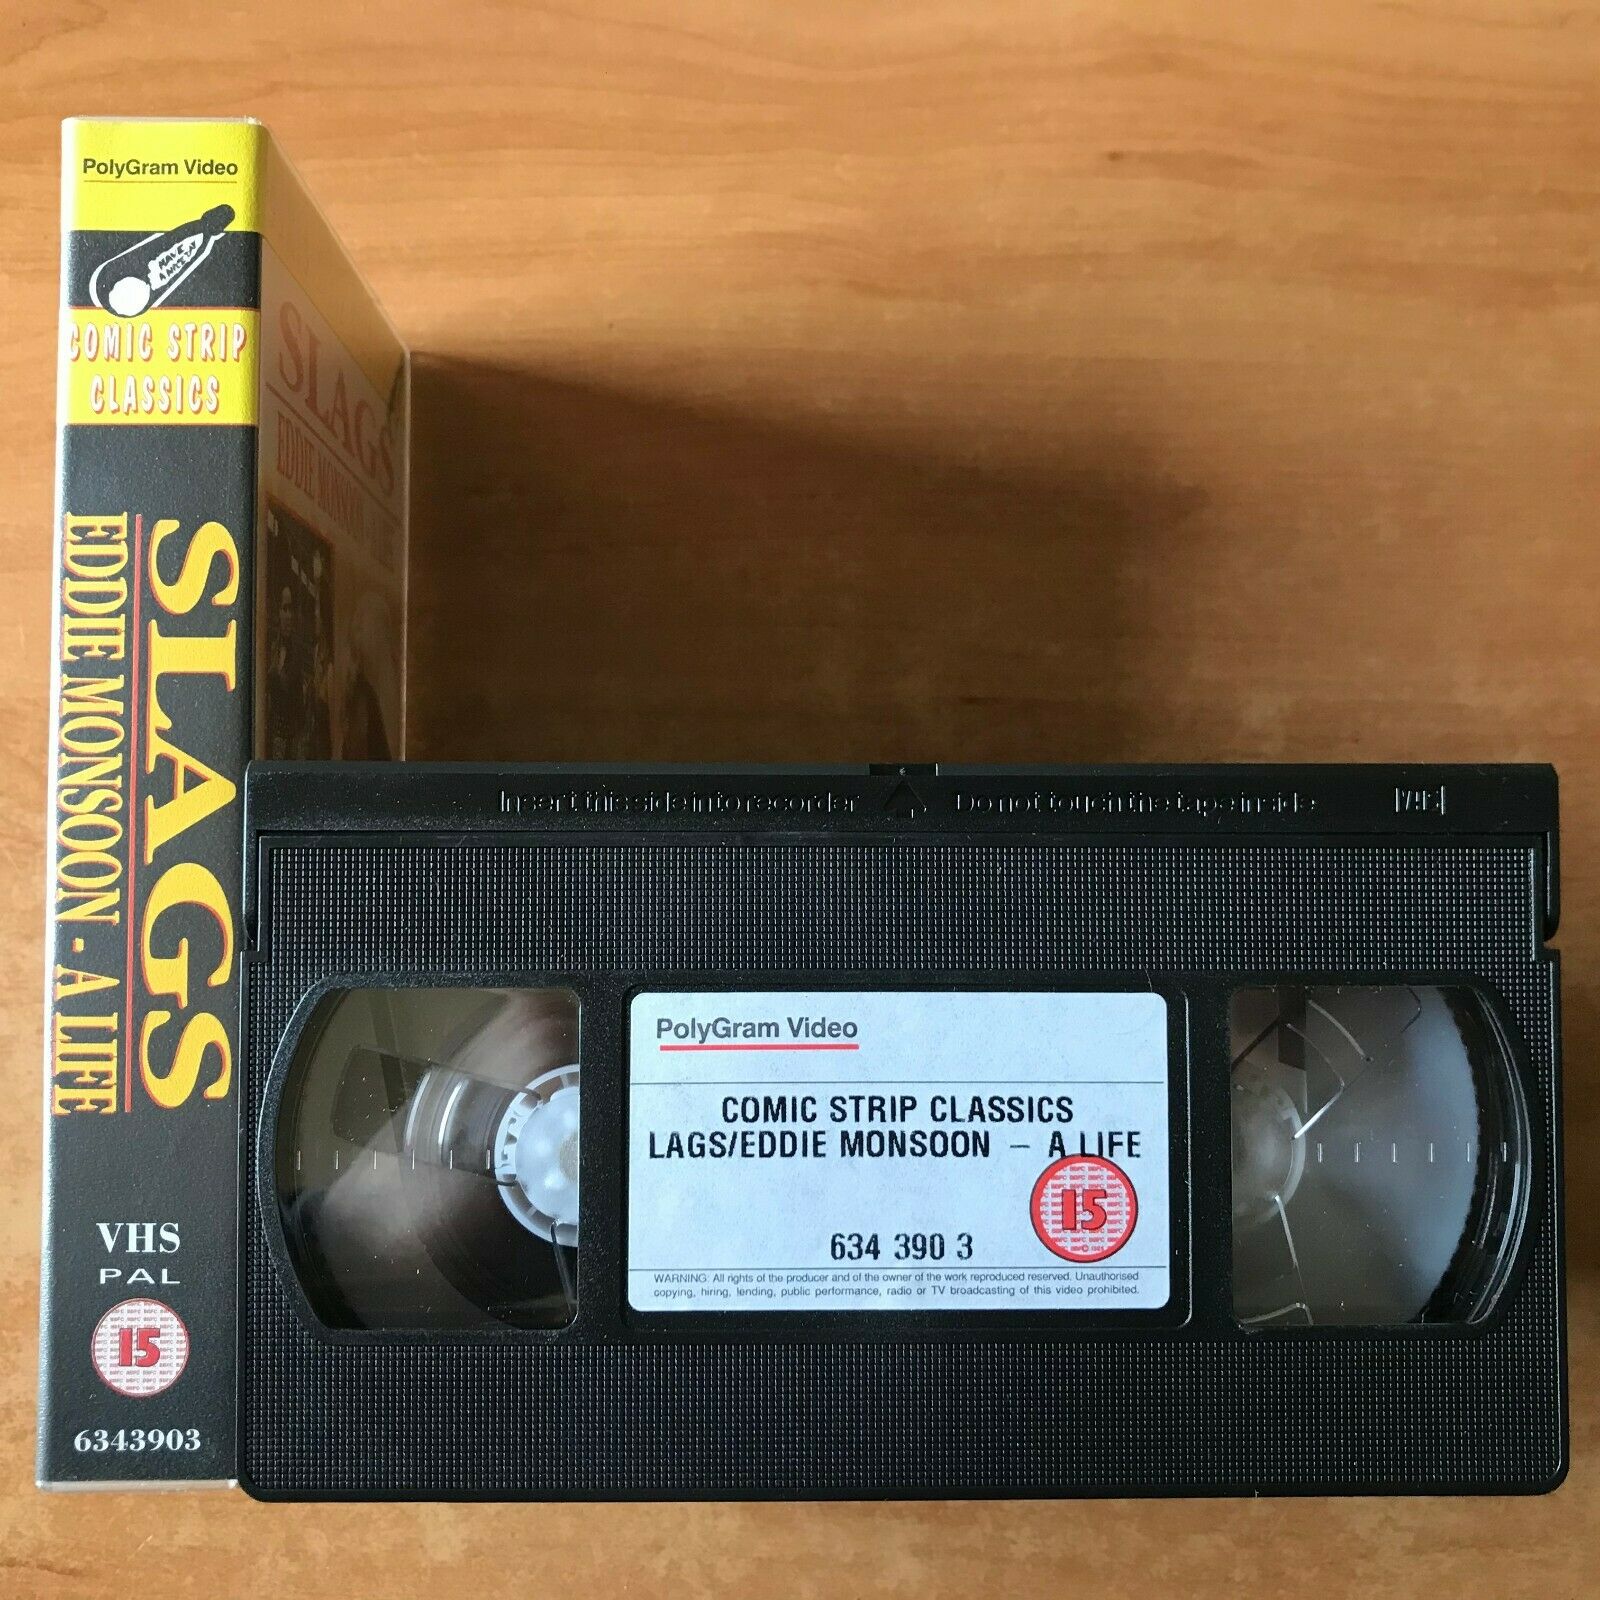 Slags / Eddie Monsoon: A Life [Comic Strip Classics] Jennifer Saunders - Pal VHS-